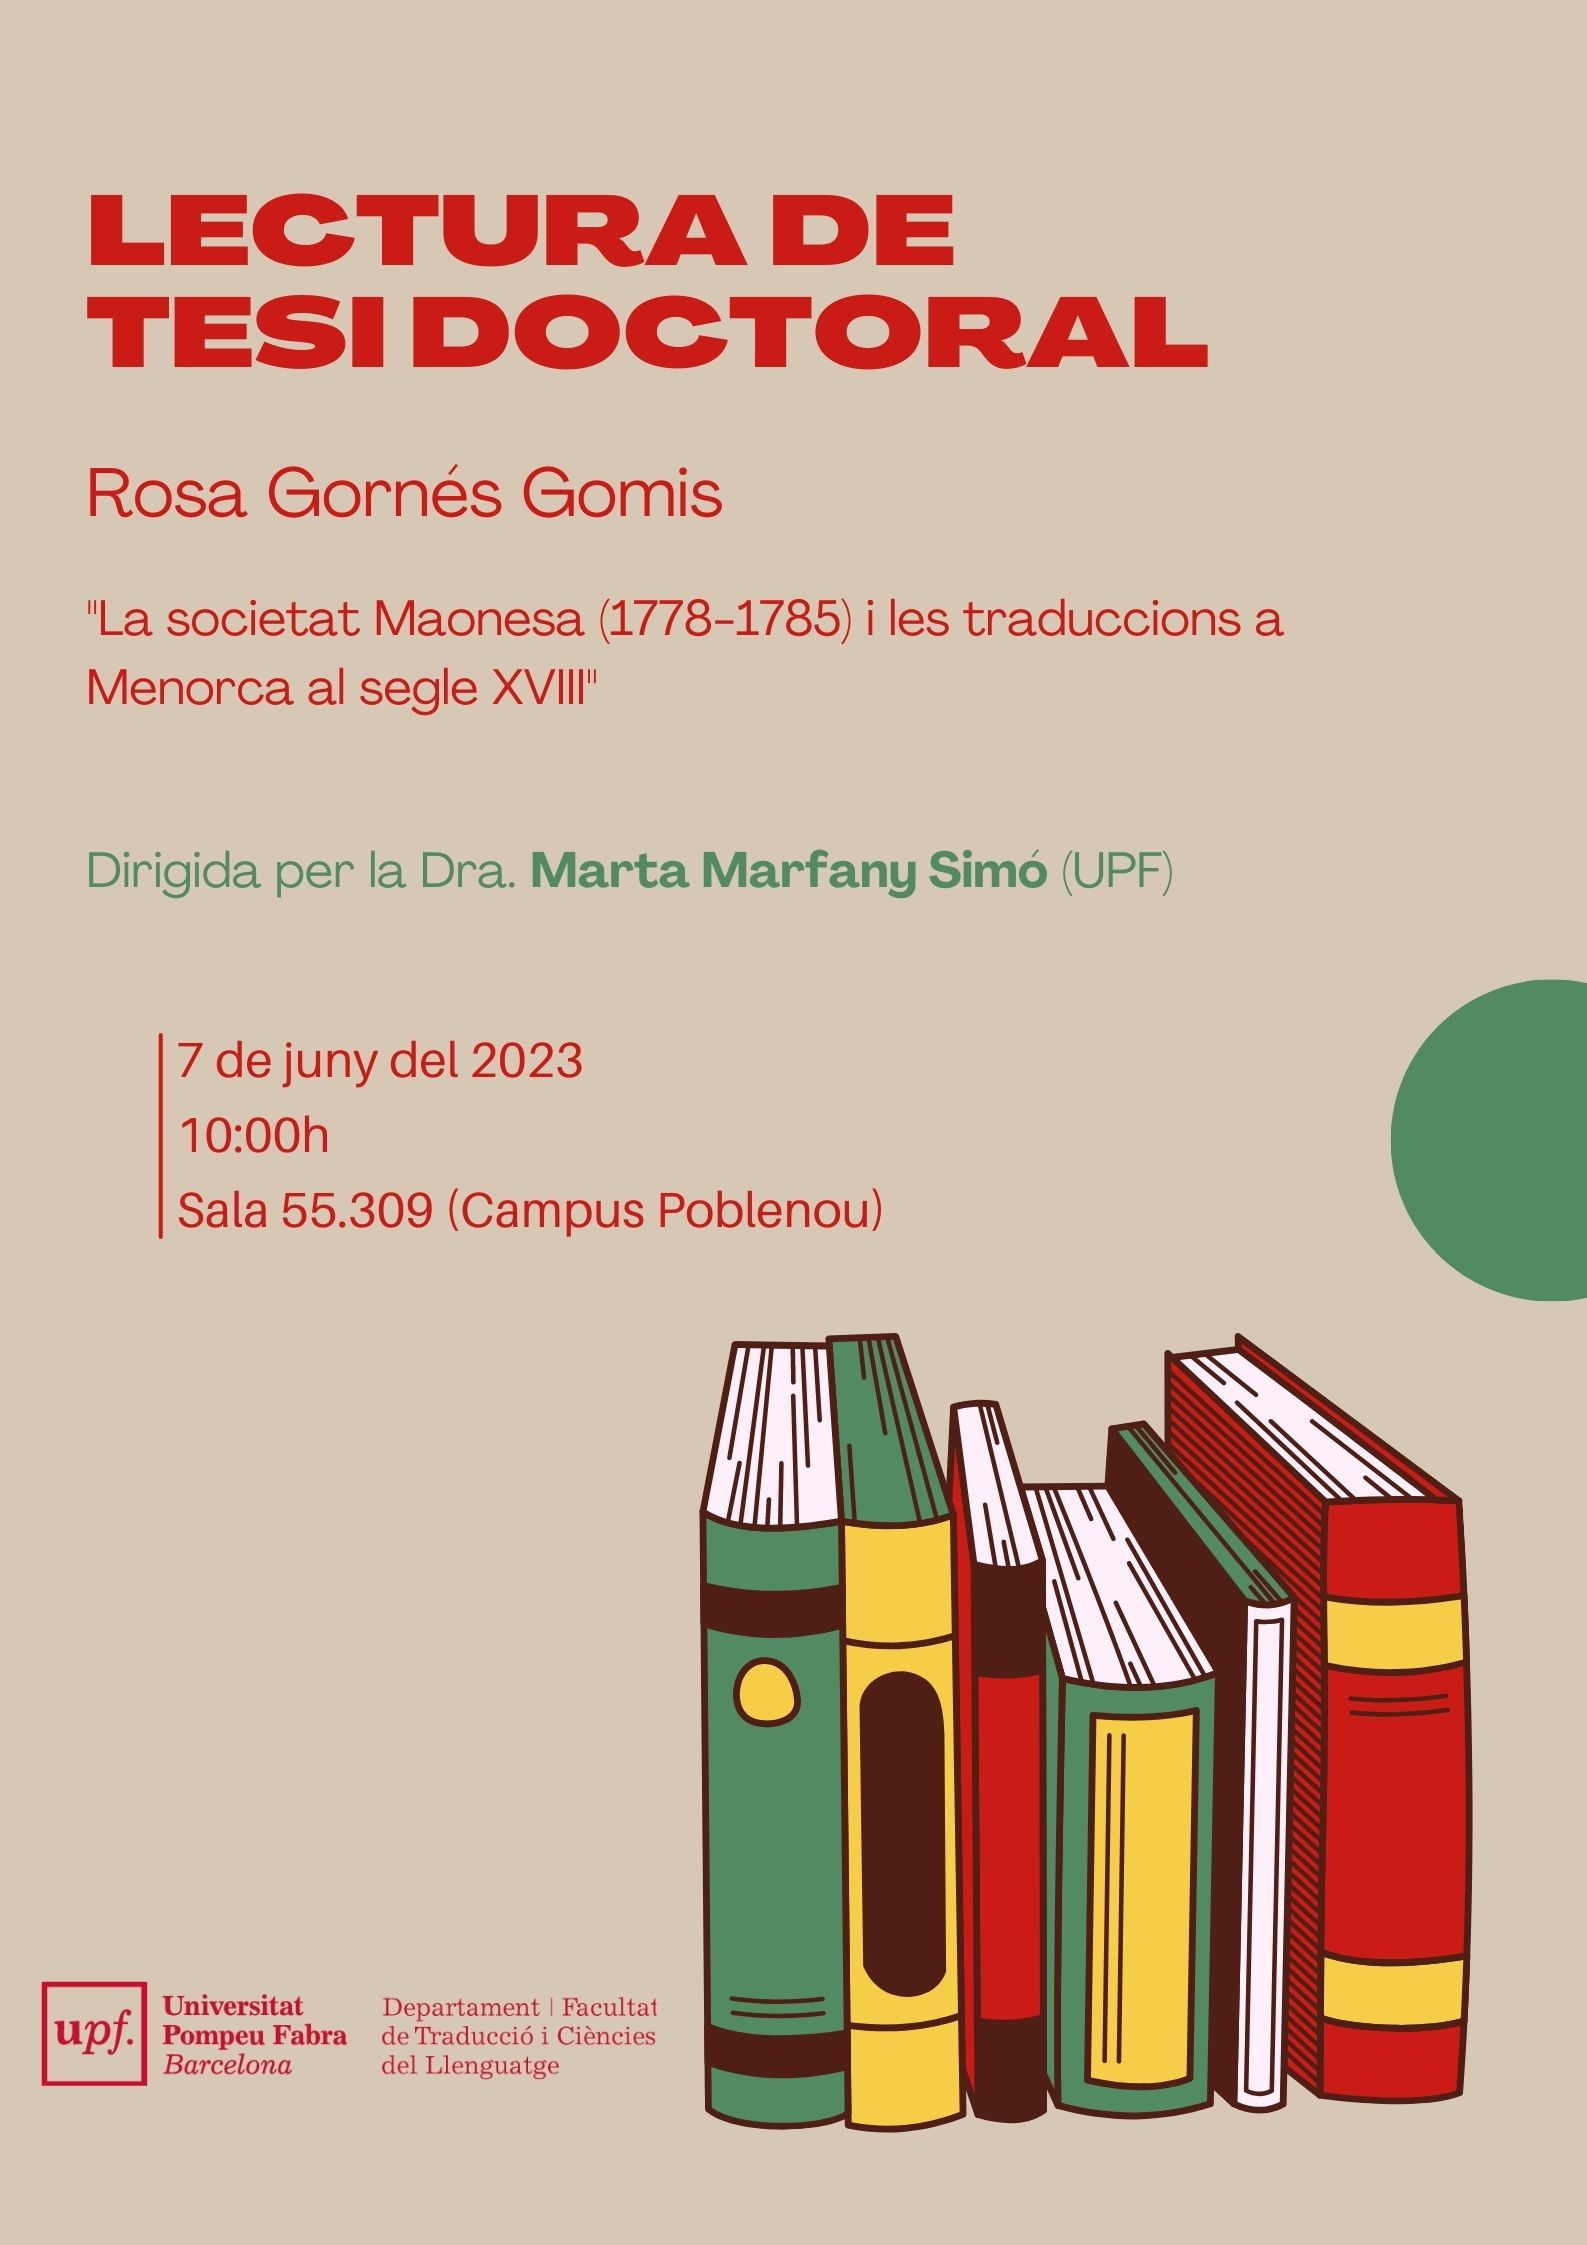 07/06/2023 Lectura de la tesi doctoral de Rosa Gornés Gomis, a les 10.00 hores